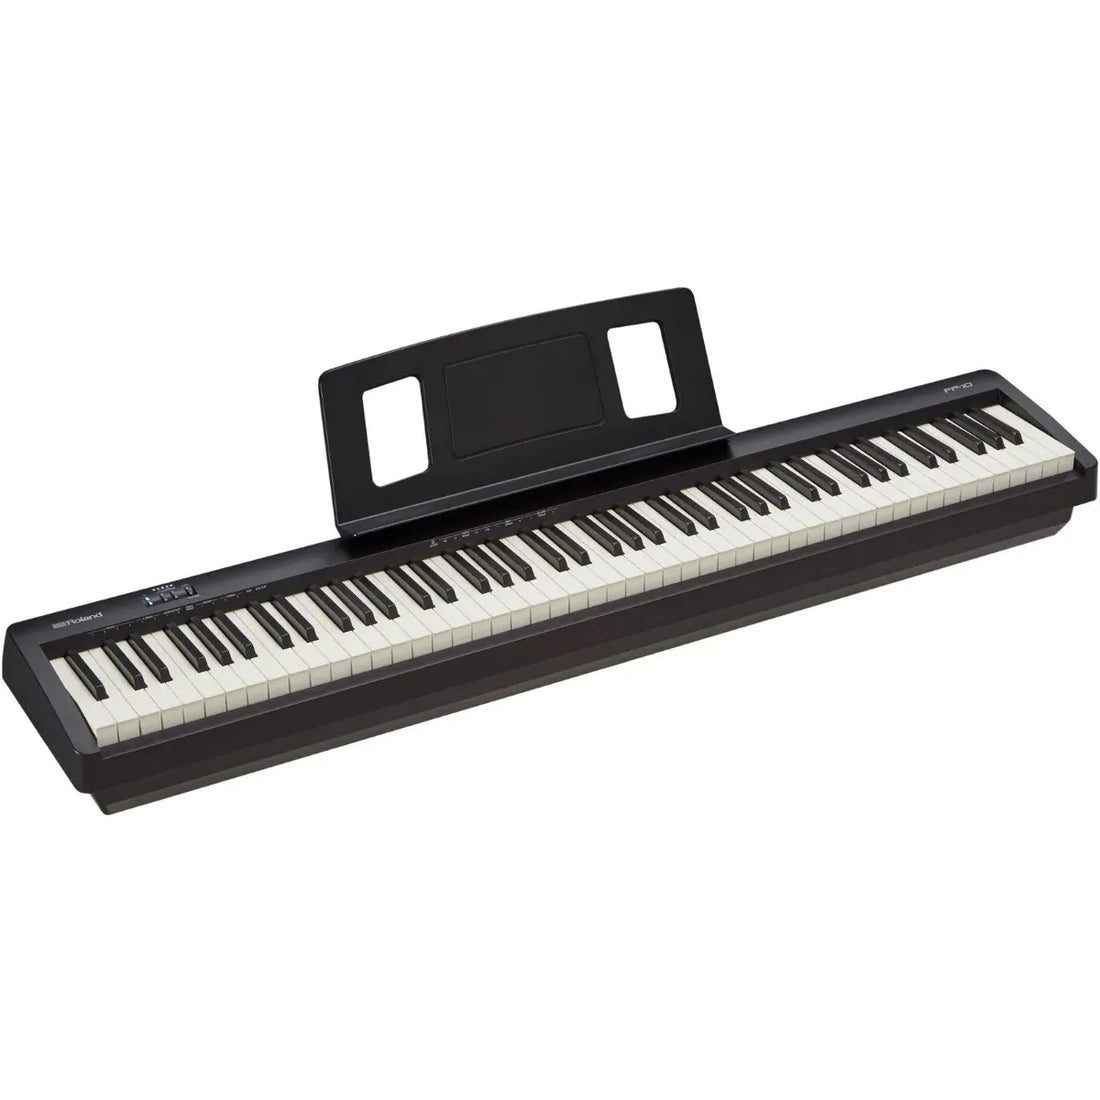 Fp-10-bk Roland Piano Digital Con Stand Para Partitura Negro